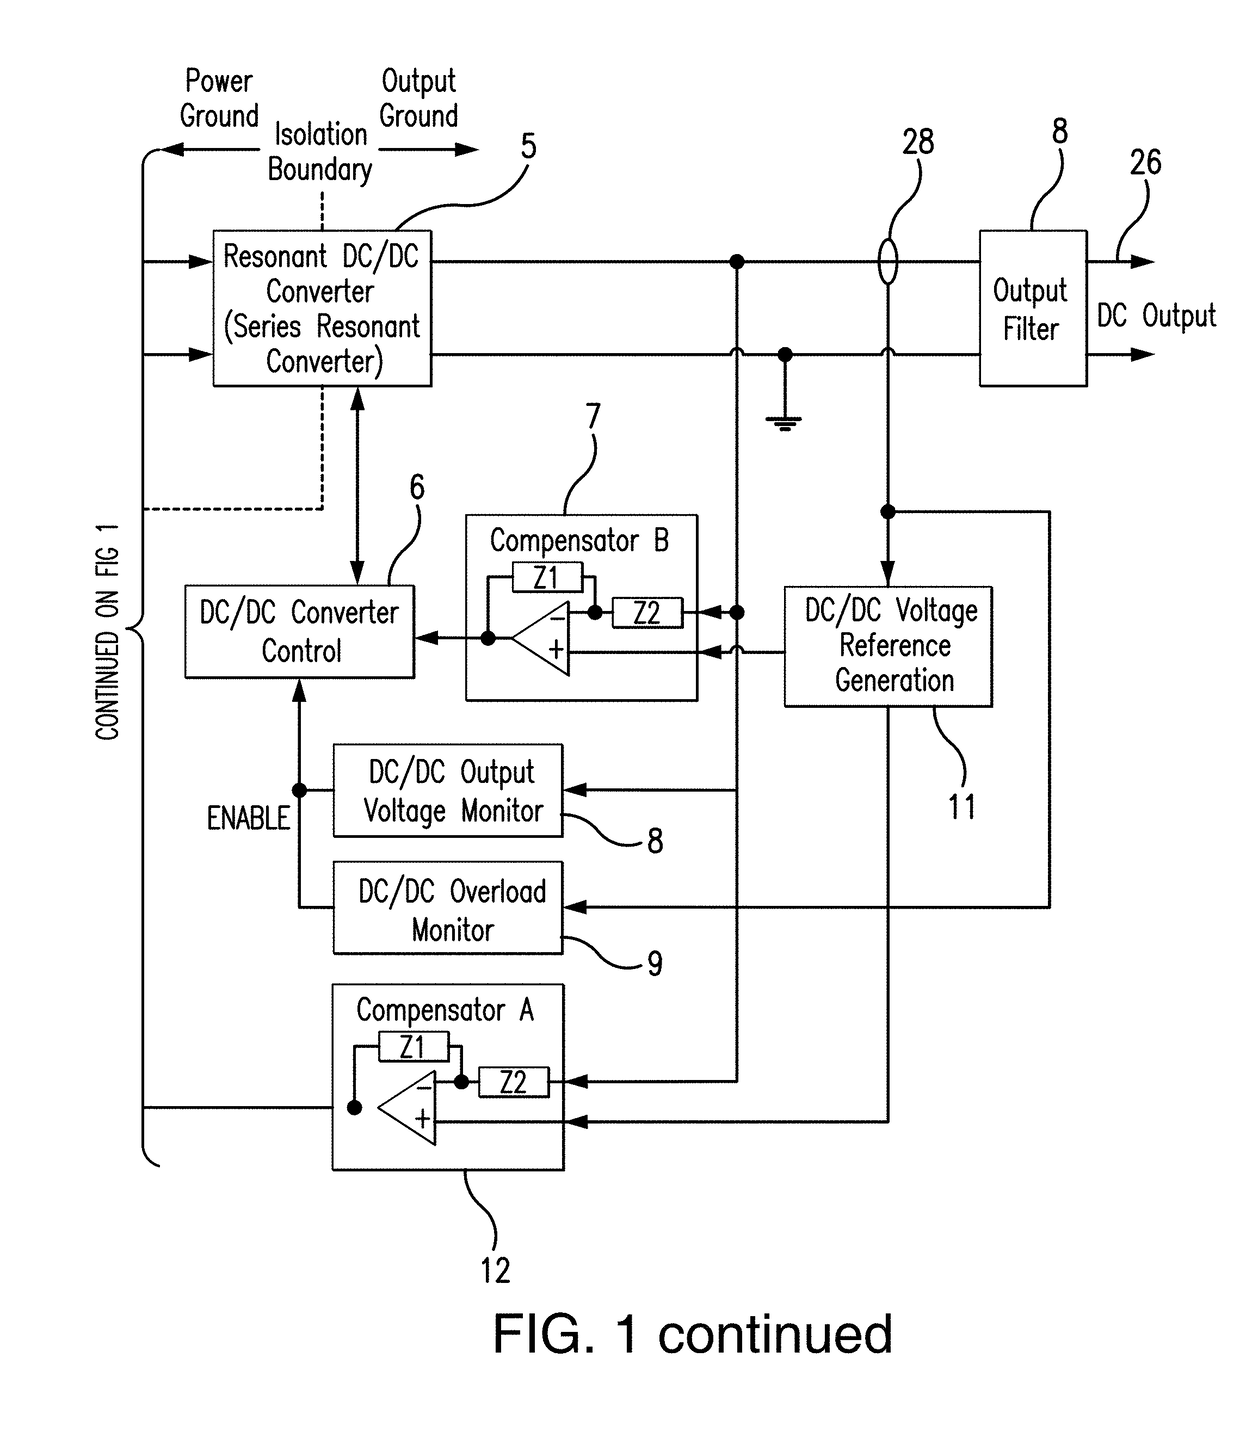 Regulating transformer rectifier unit for DC power applications